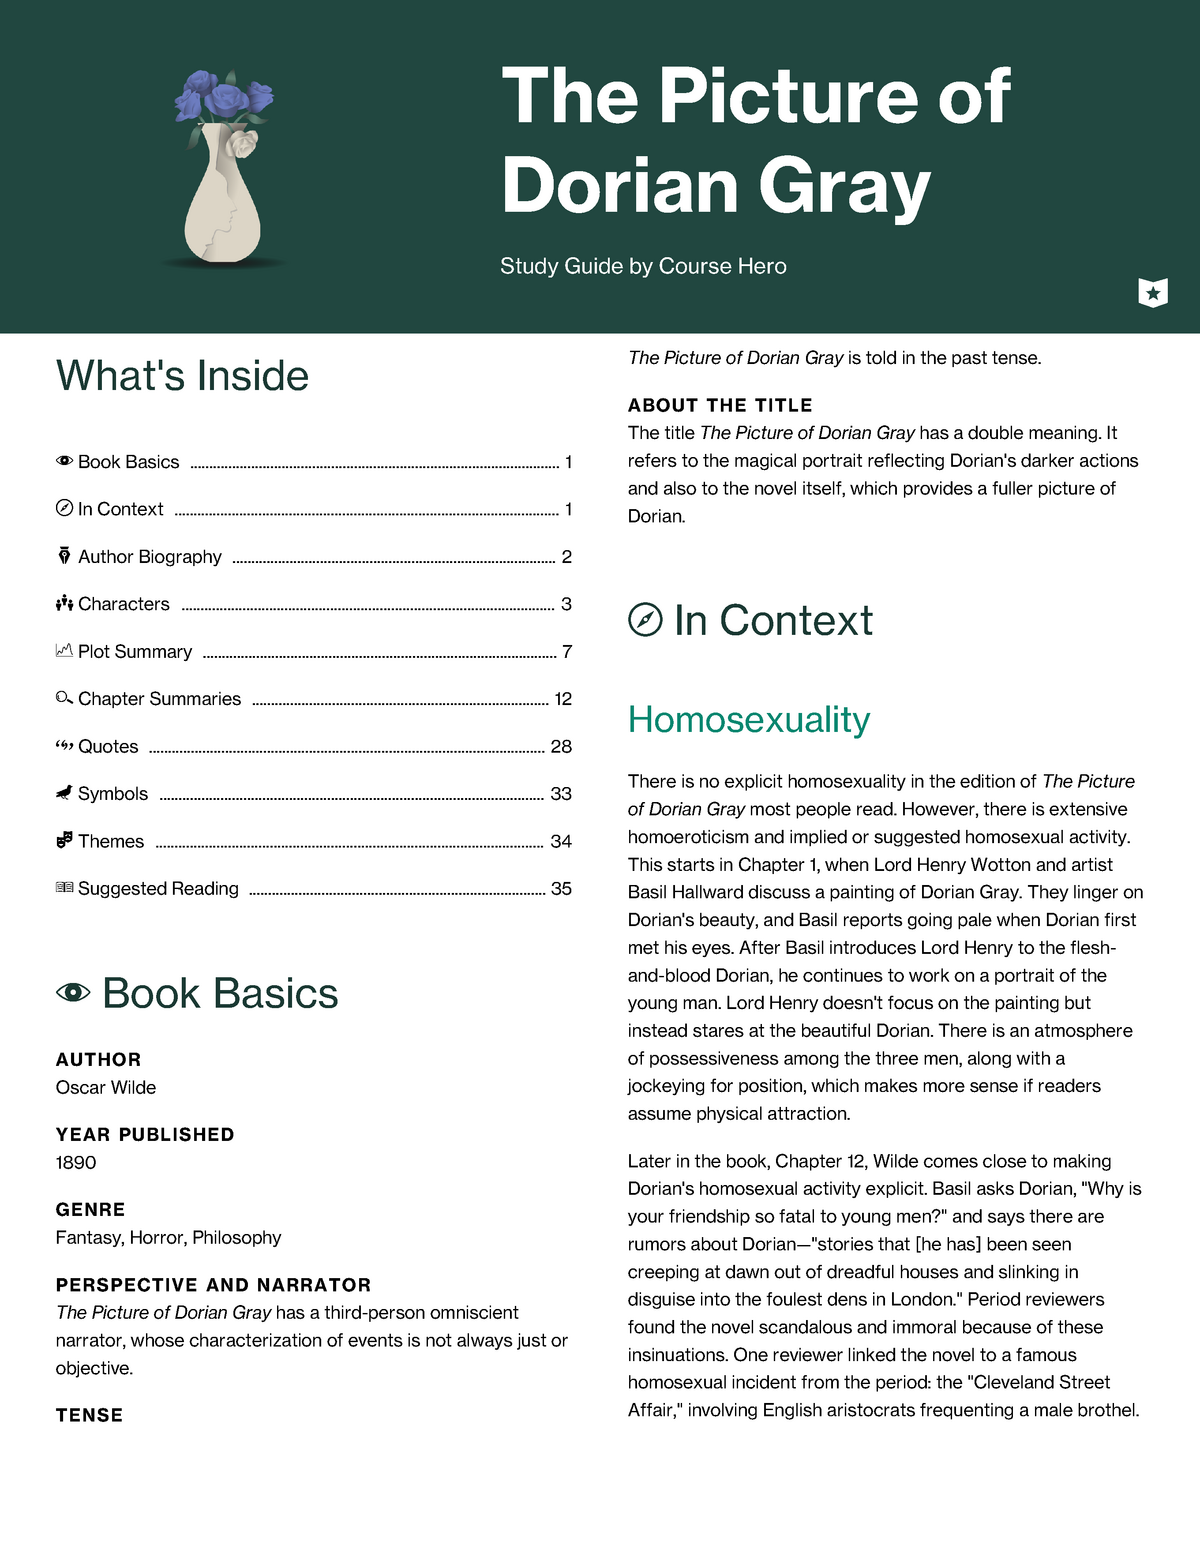 dorian gray essays grade 12